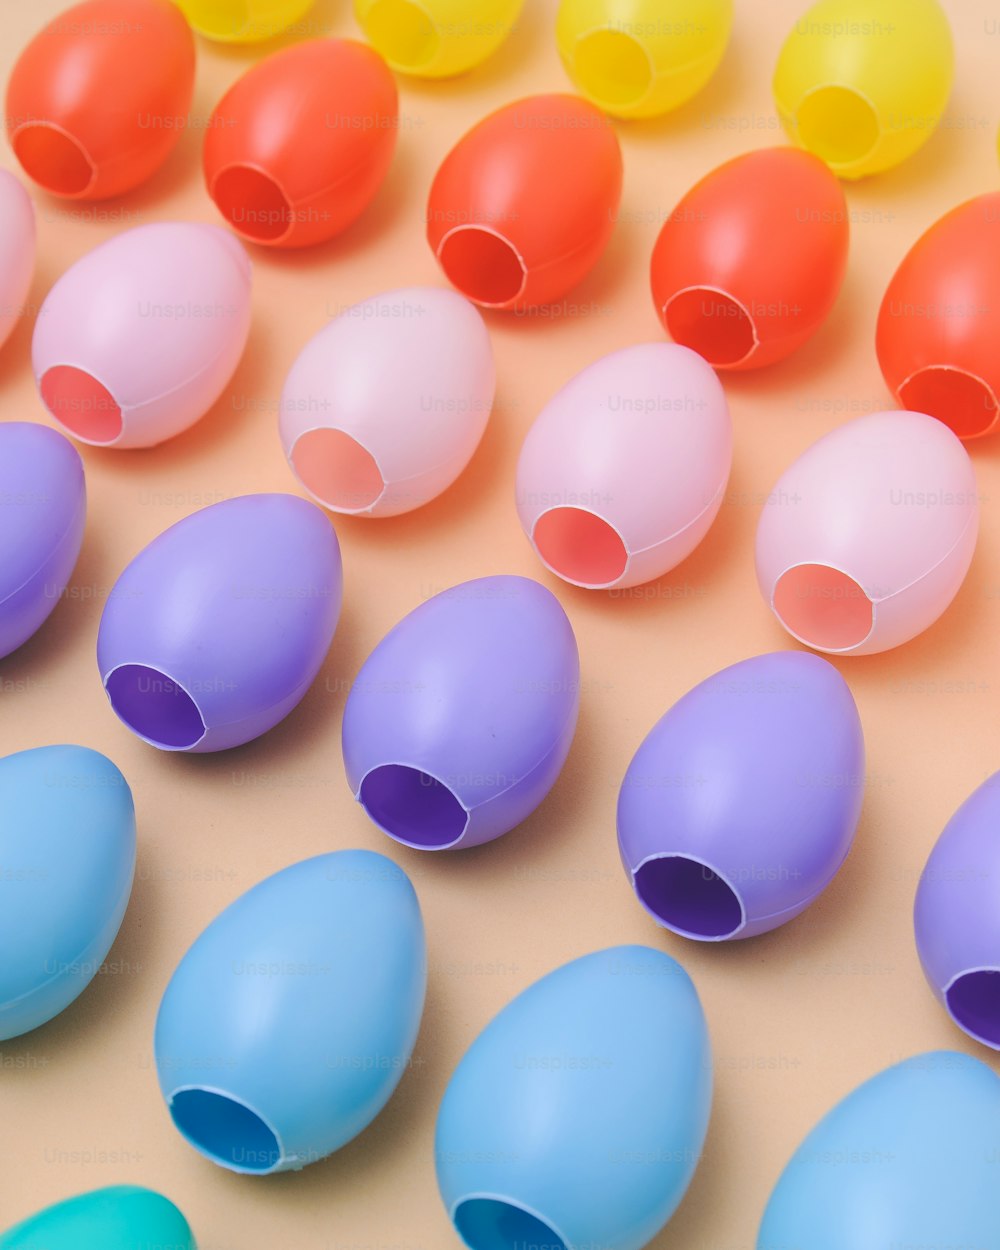 Un primer plano de un montón de huevos de plástico